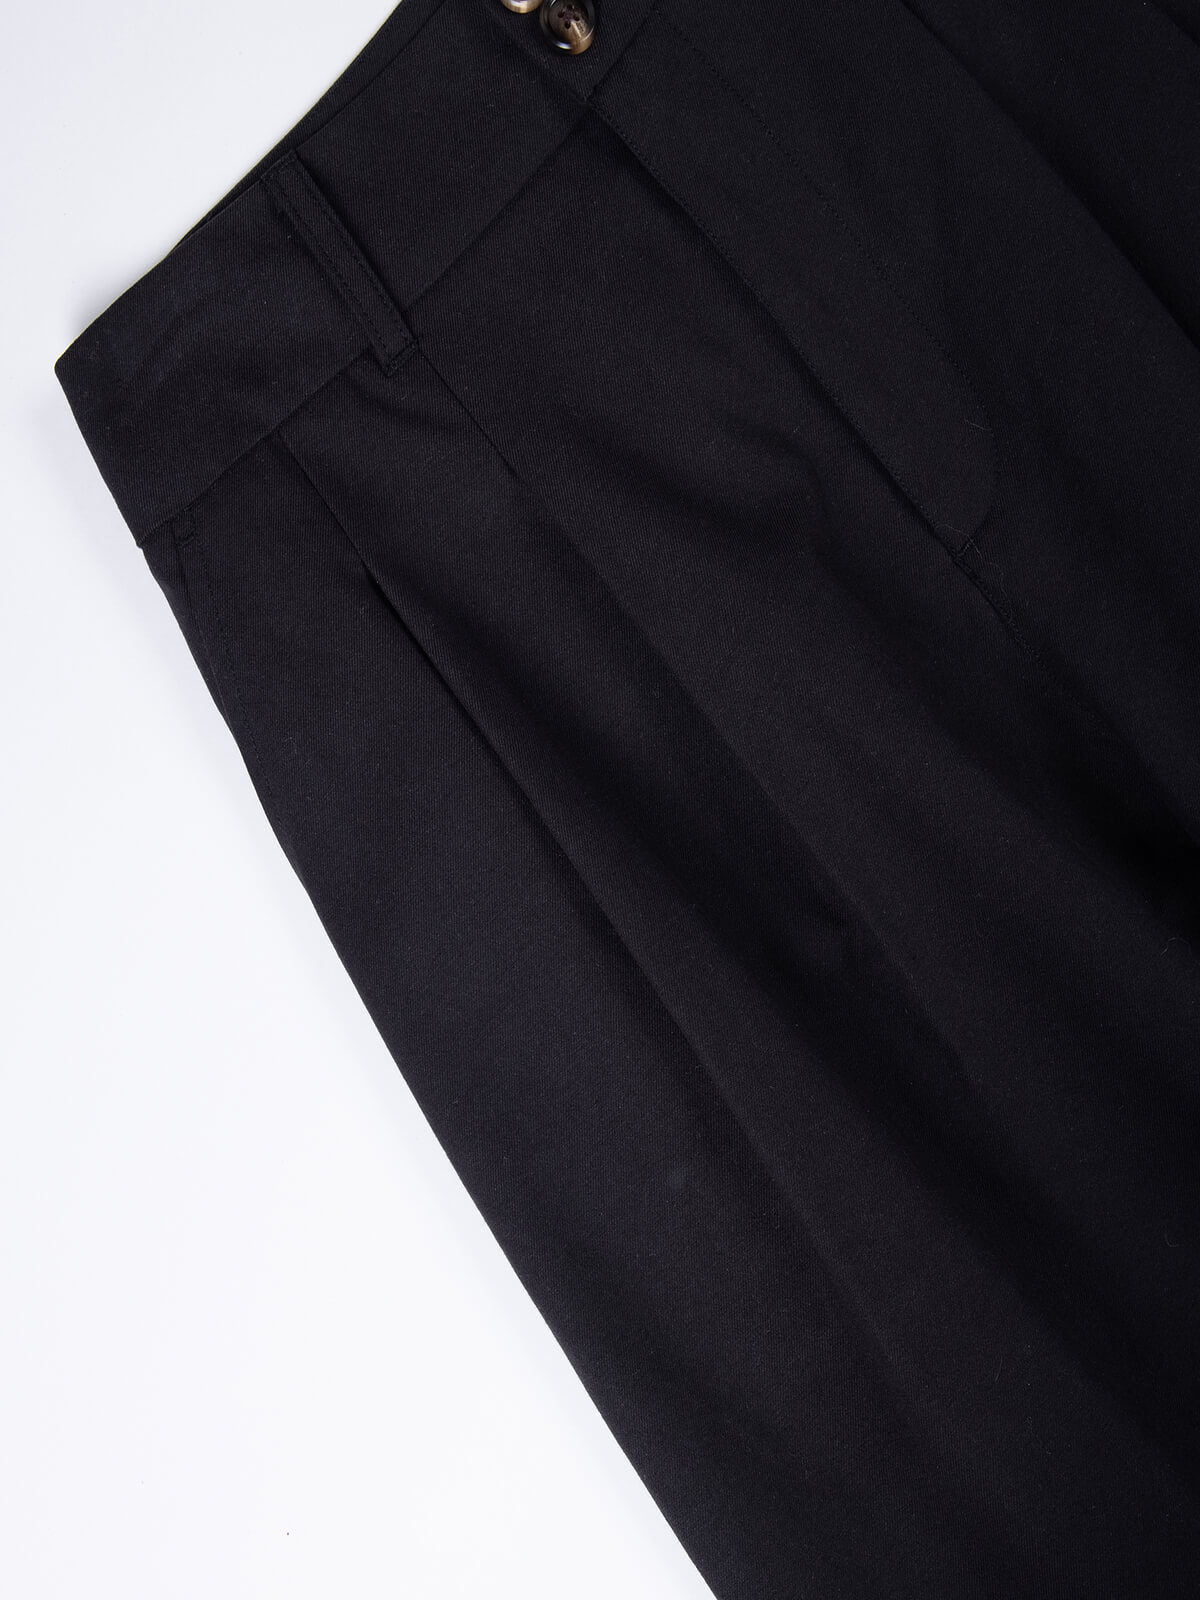 ASOBIO Black Tencel Cotton Wide Leg Pant